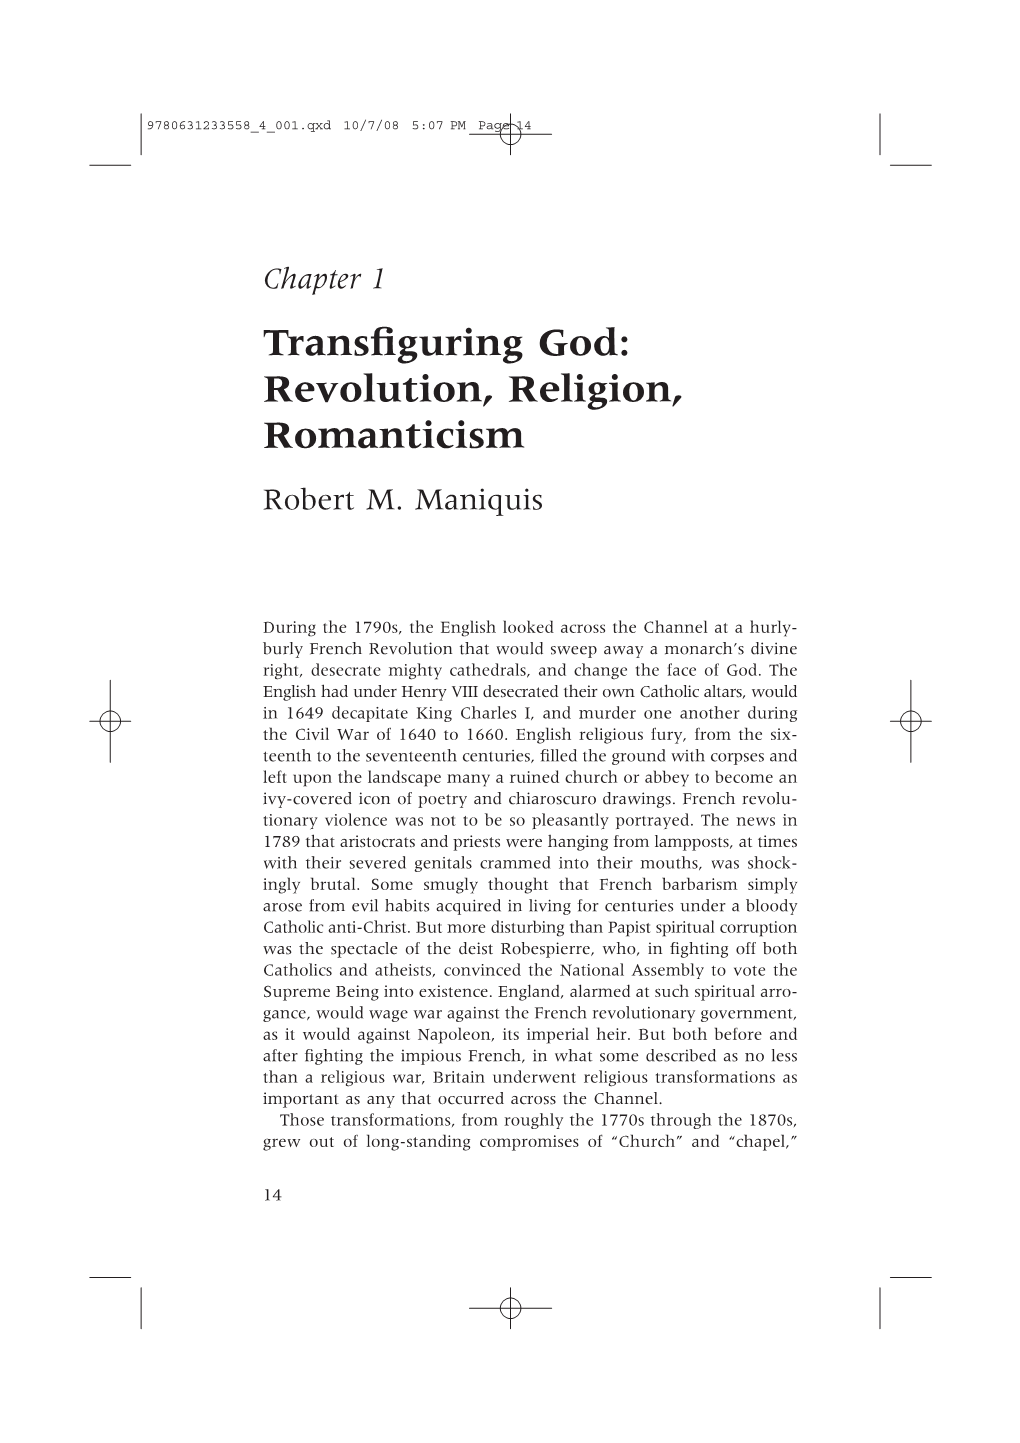 Transfiguring God: Revolution, Religion, Romanticism